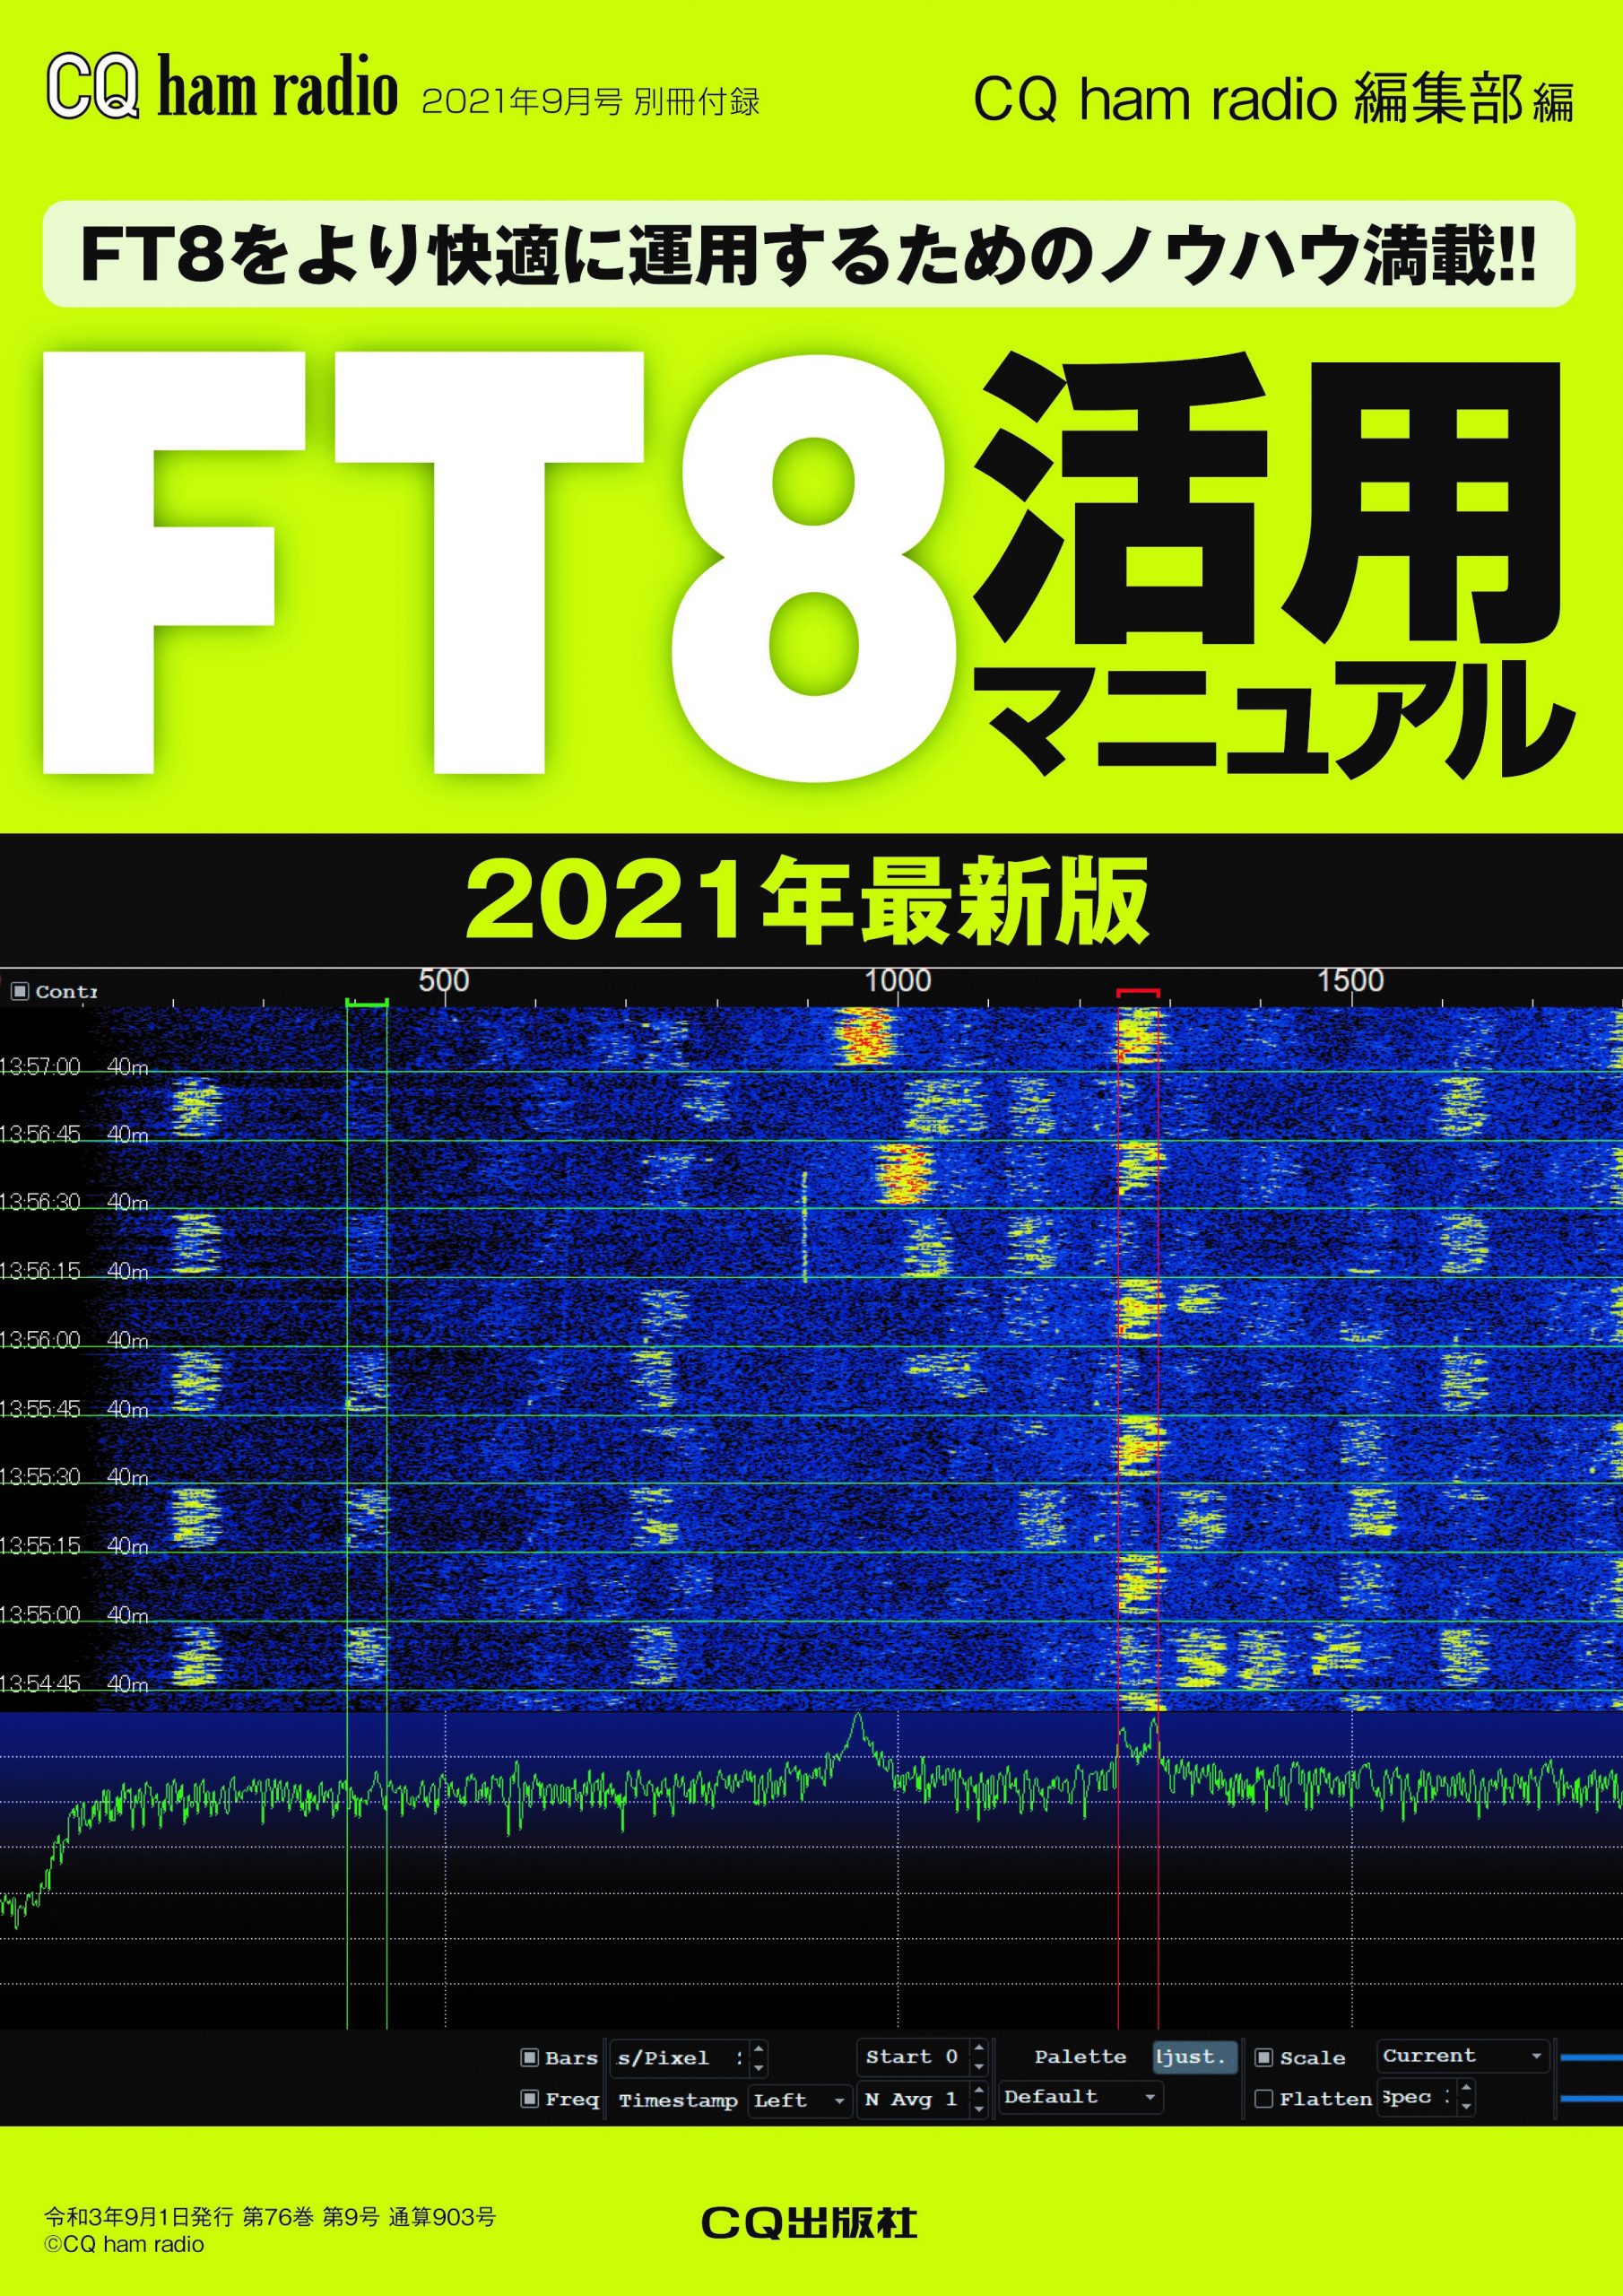 CQ ham radio 2021年9月号 別冊付録 FT8活用マニュアル 2021最新版